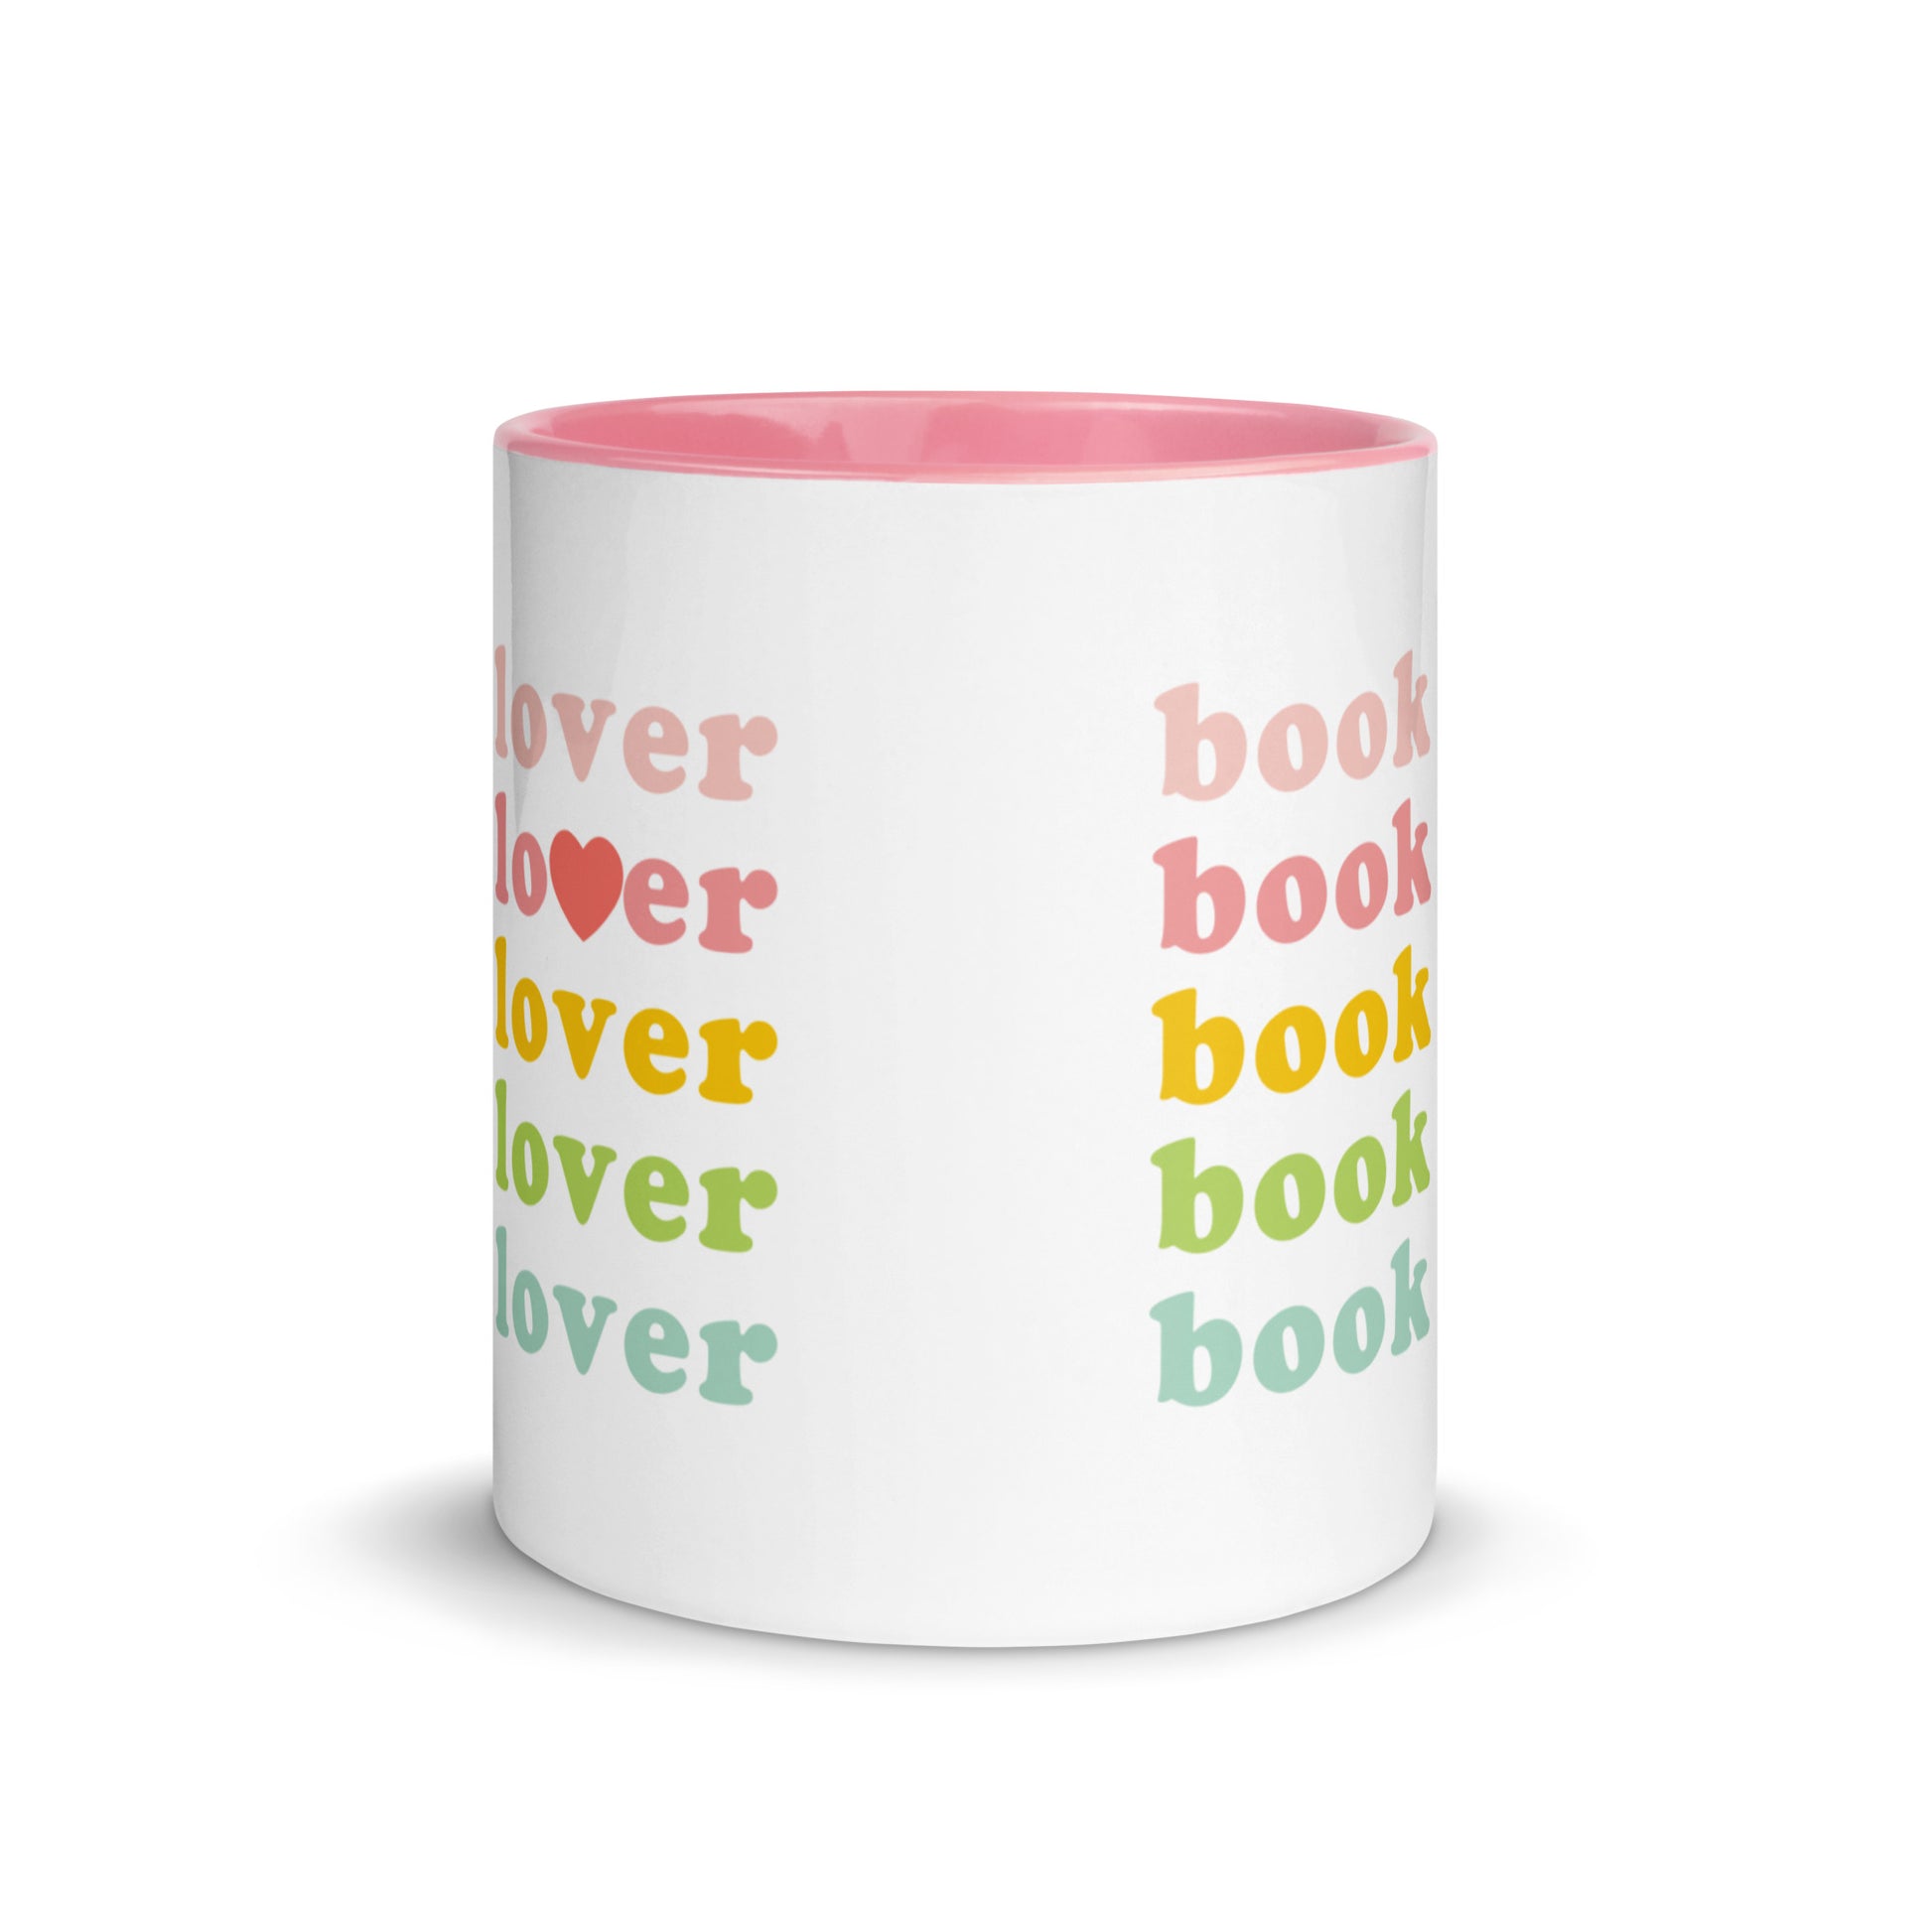 Book Lover Mug with Color Inside - Ceramic Mug with Colored Rim & Handle